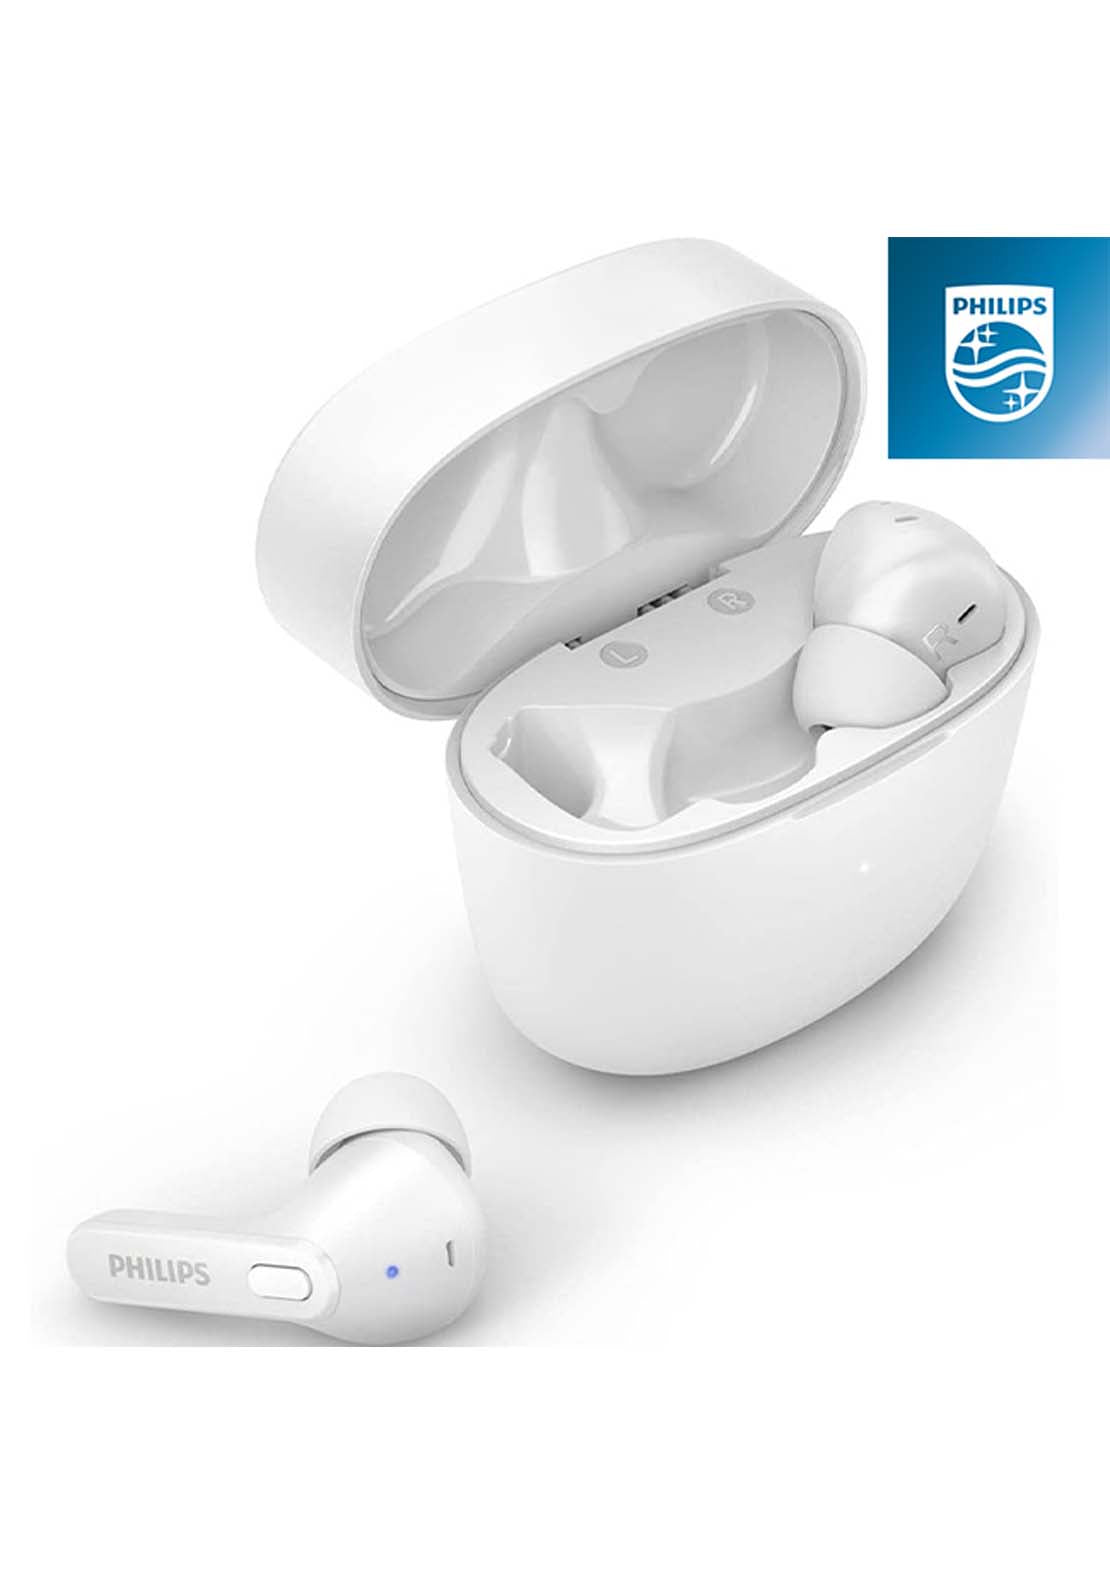 Philips Wireless Bluetooth Headphones | Tat2206Wt00 3 Shaws Department Stores